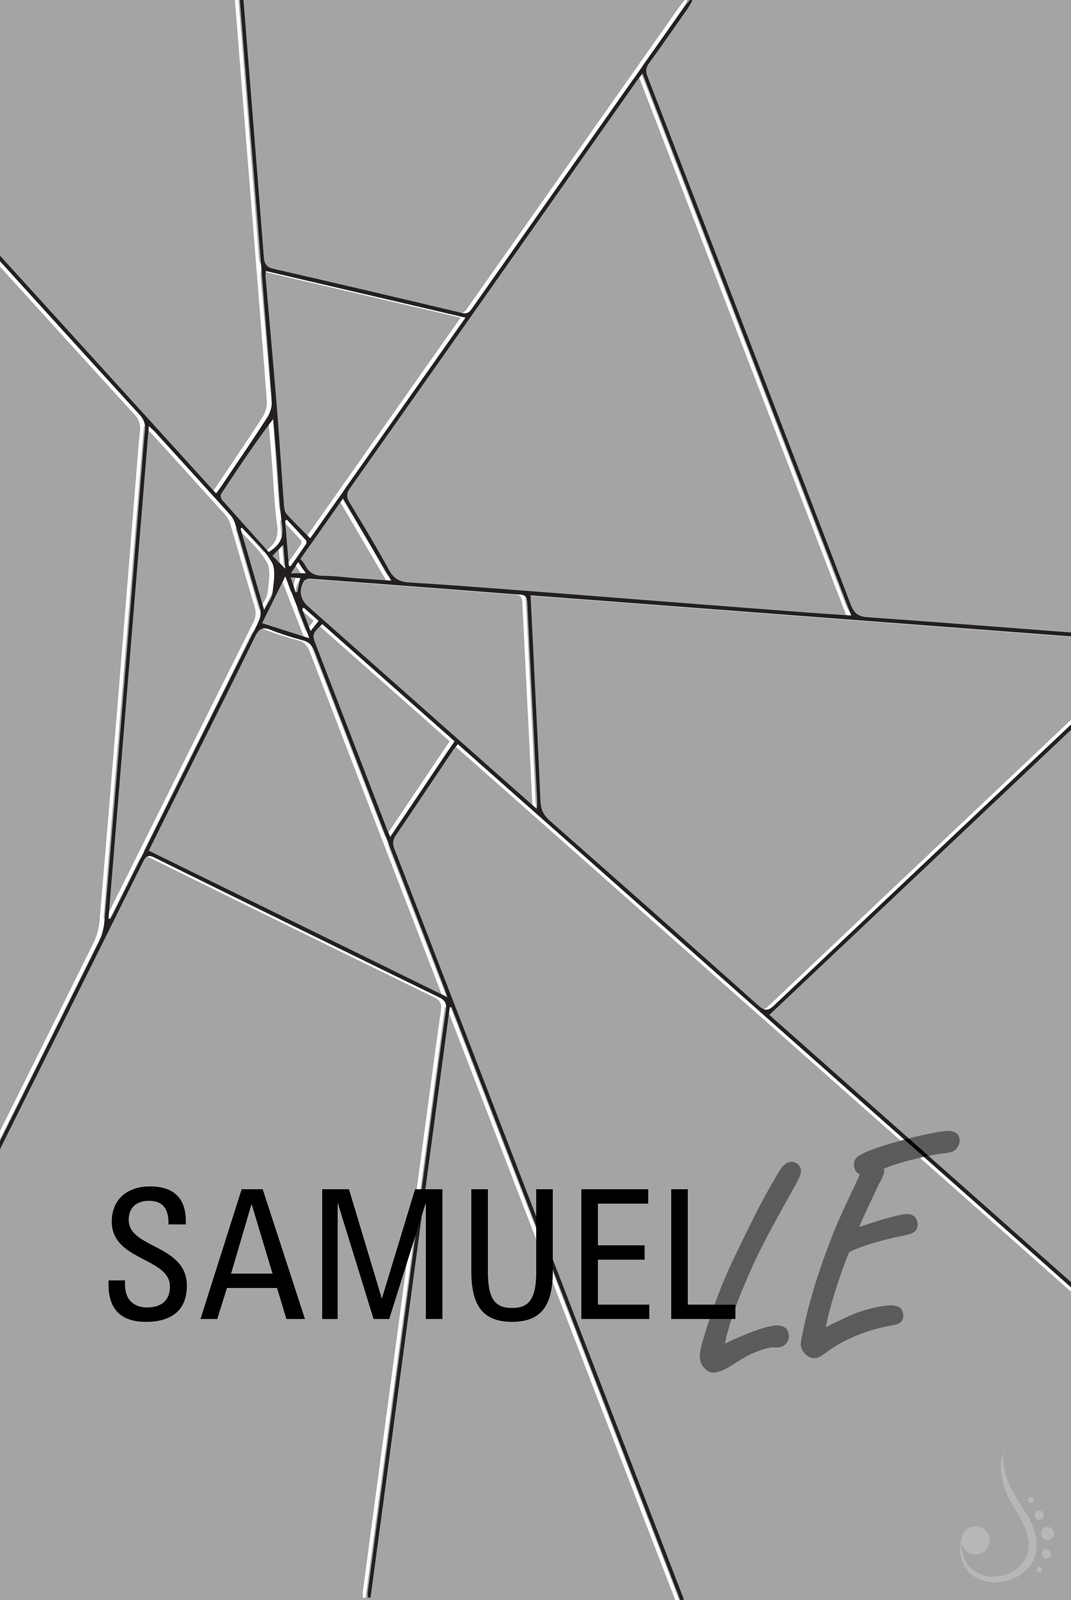 Samuelle